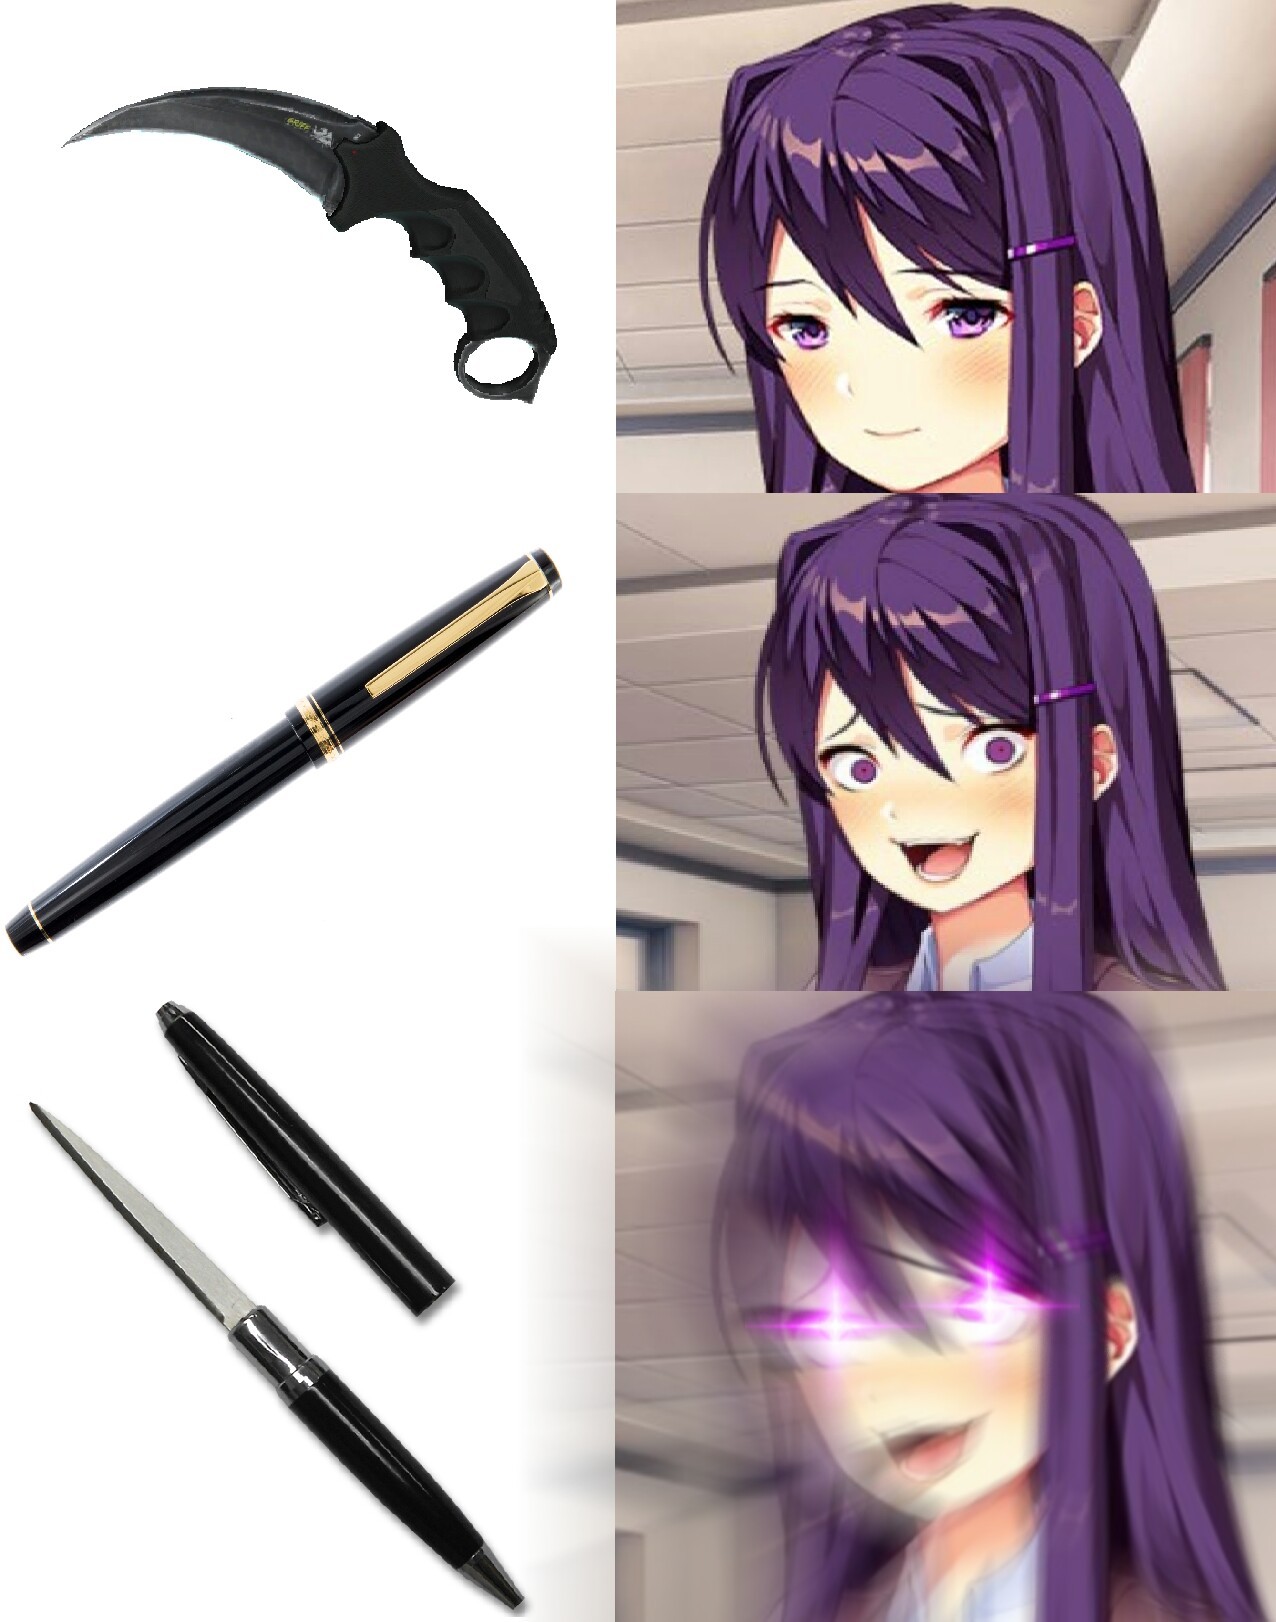 Yuri likes this. - meme